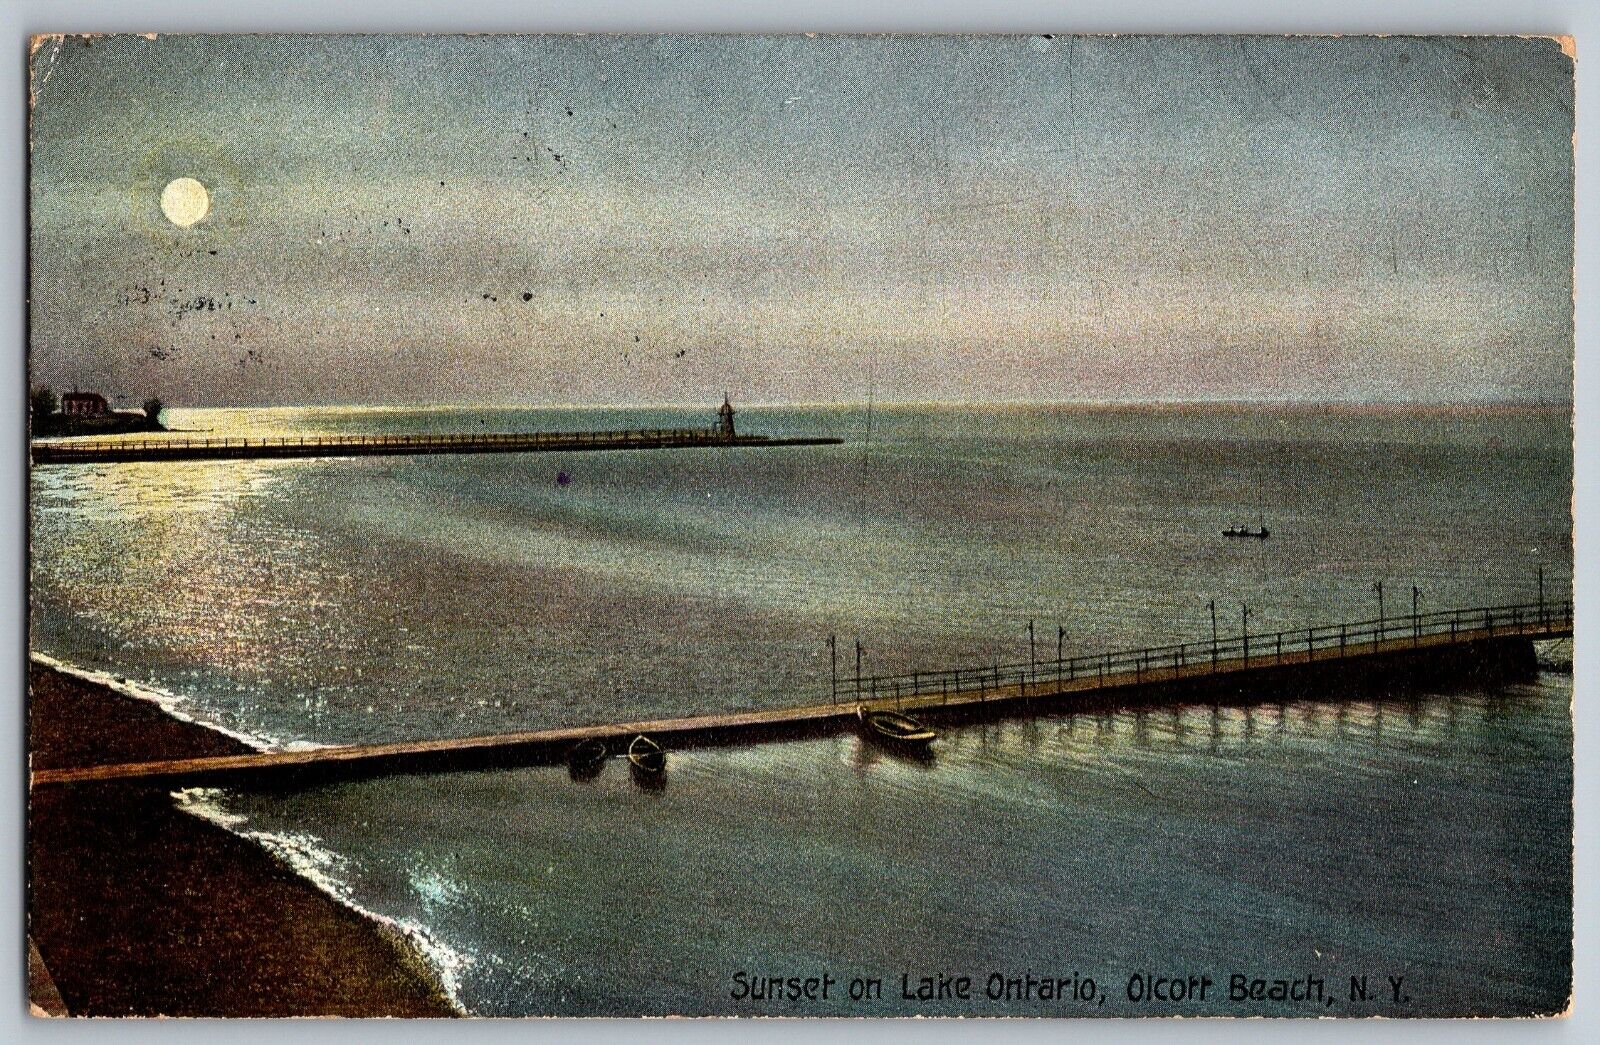 Olcott Beach, New York - Sunset View on Lake Ontario - Vintage Postcard - Posted